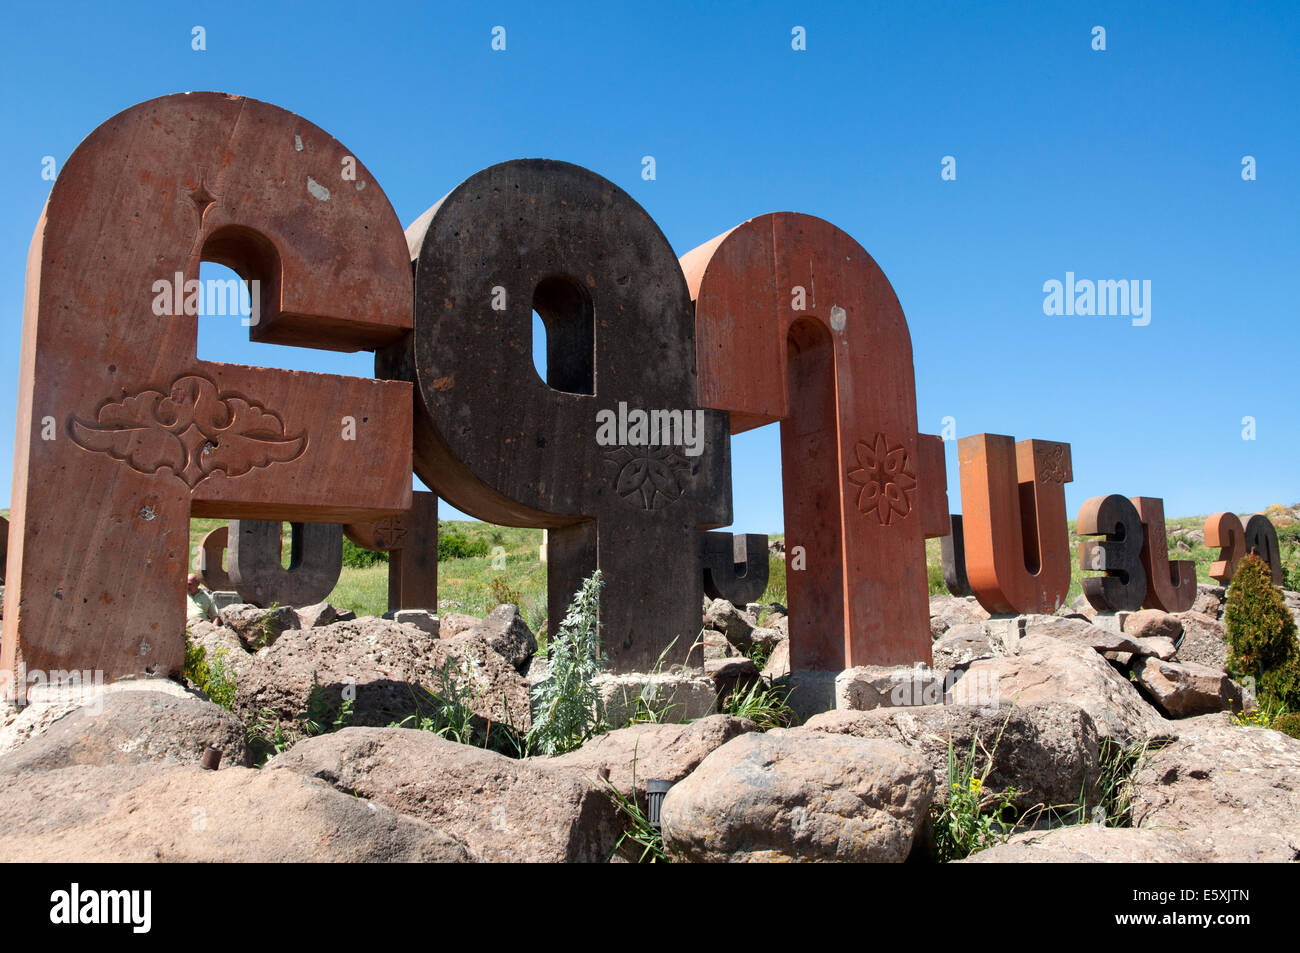 Armenian alphabet monument with giant carved letters, Artashavan village, Armenia Stock Photo